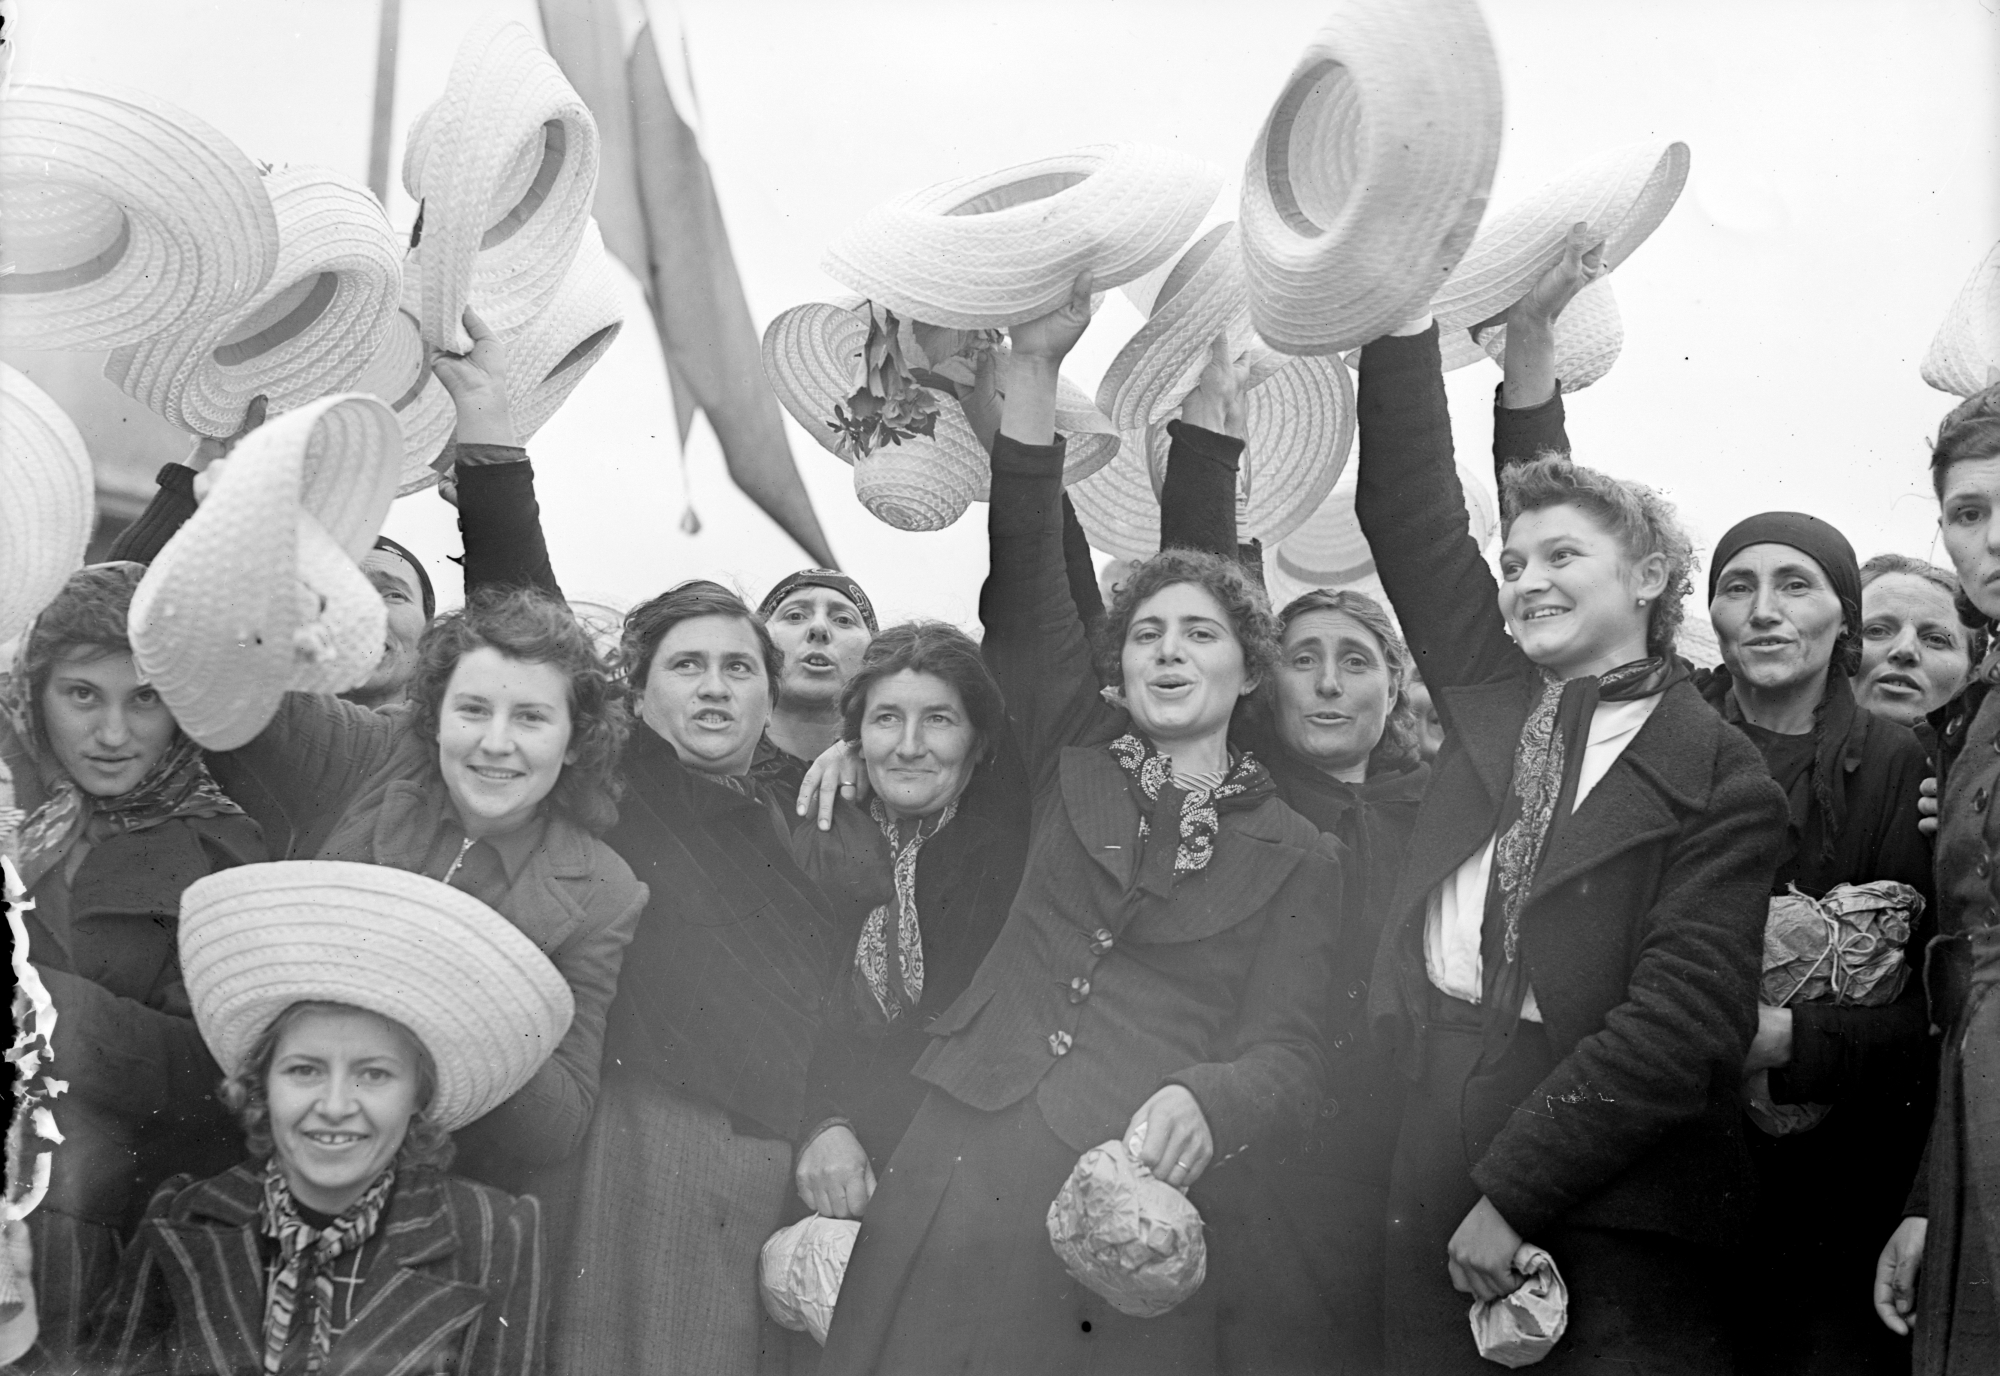 “Mondine” waving their hats, 1935 - 1945